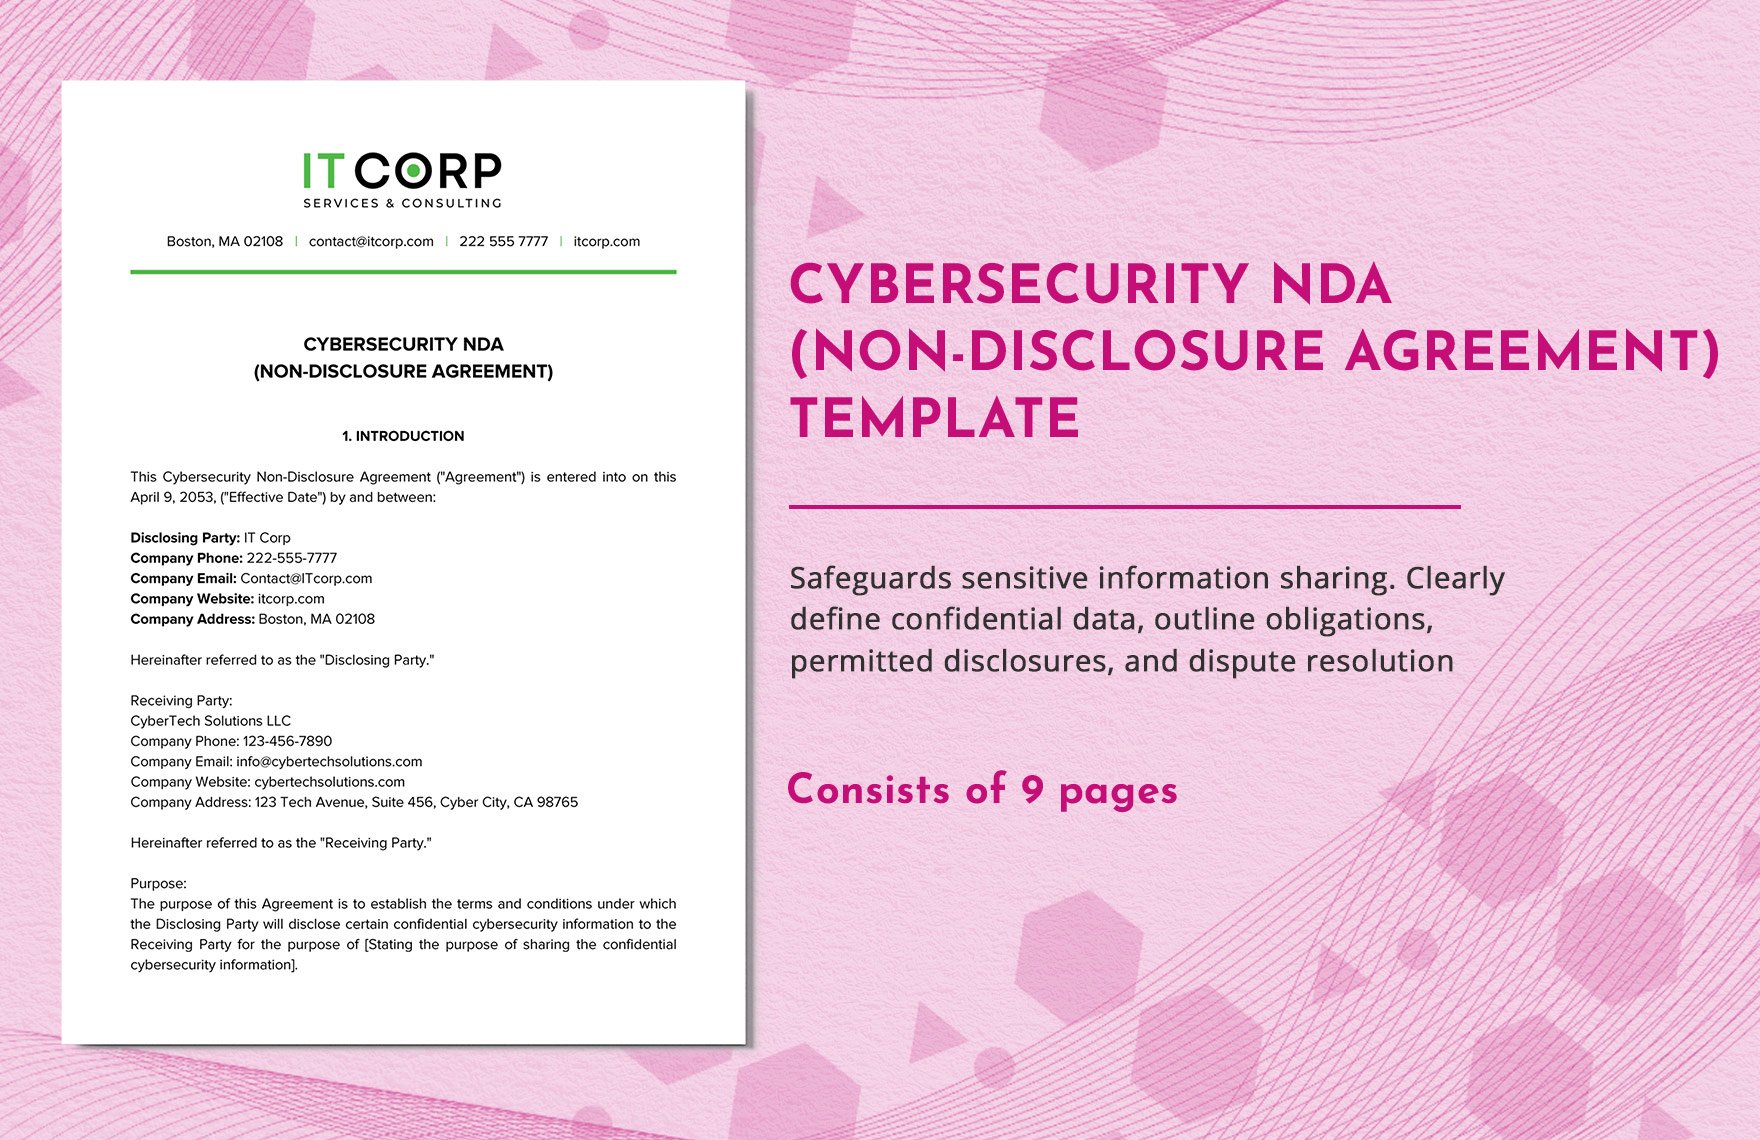 Cybersecurity NDA (Non-Disclosure Agreement) Template